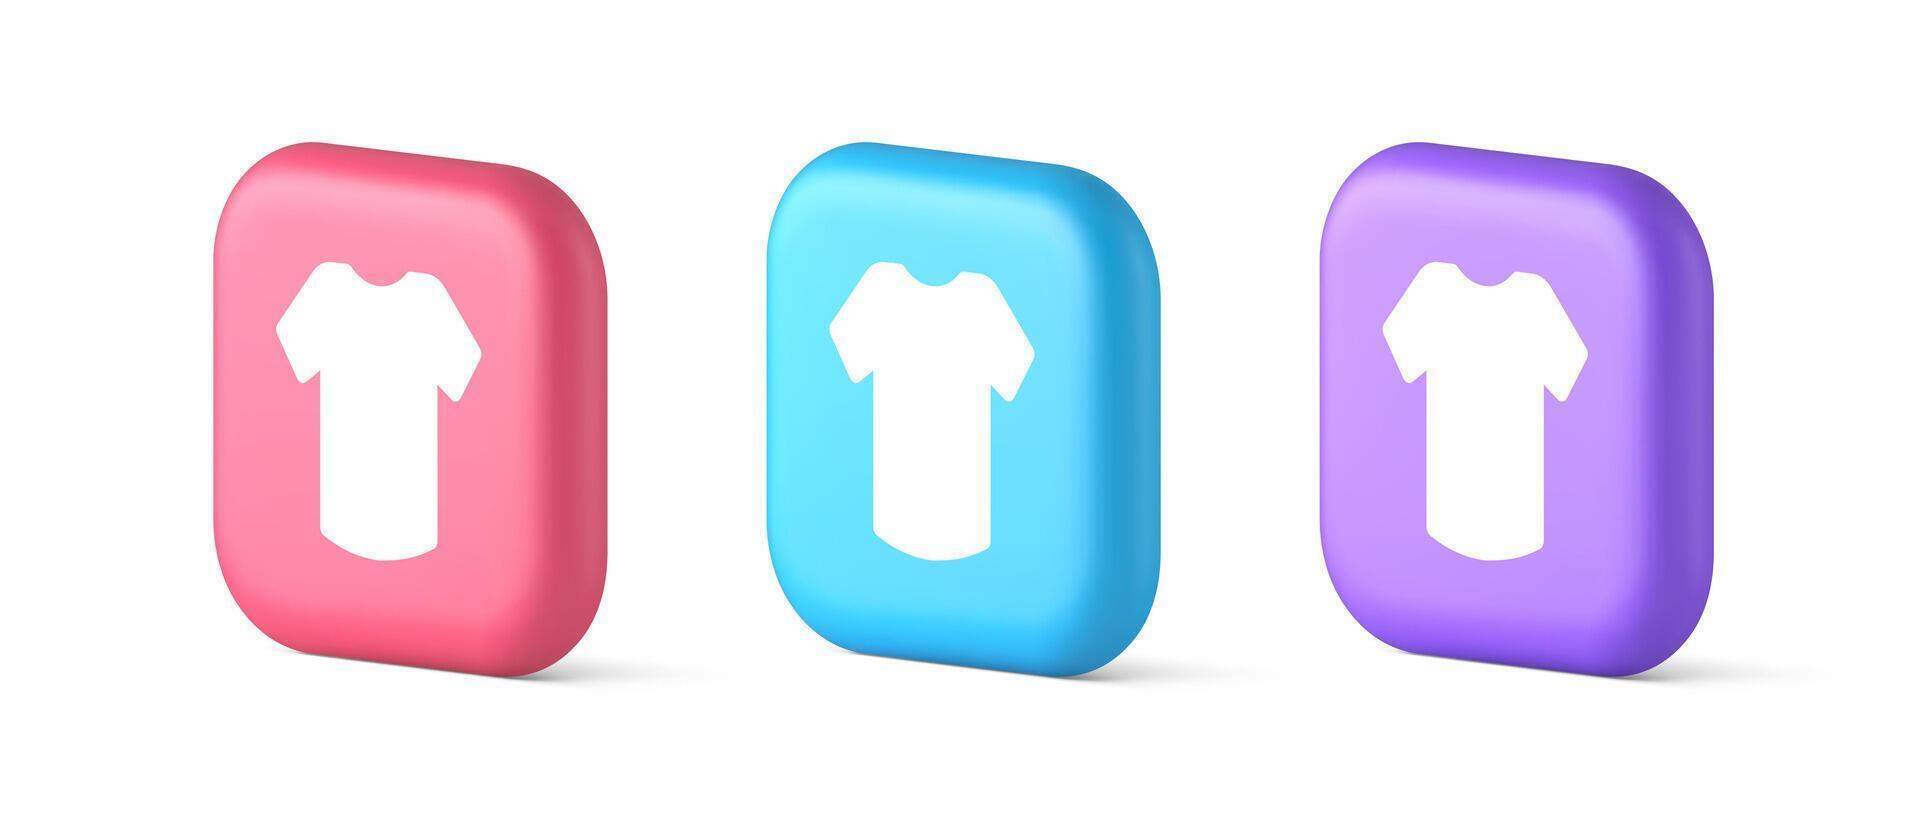 t camisa en línea compras botón Internet orden adquisitivo 3d realista icono vector